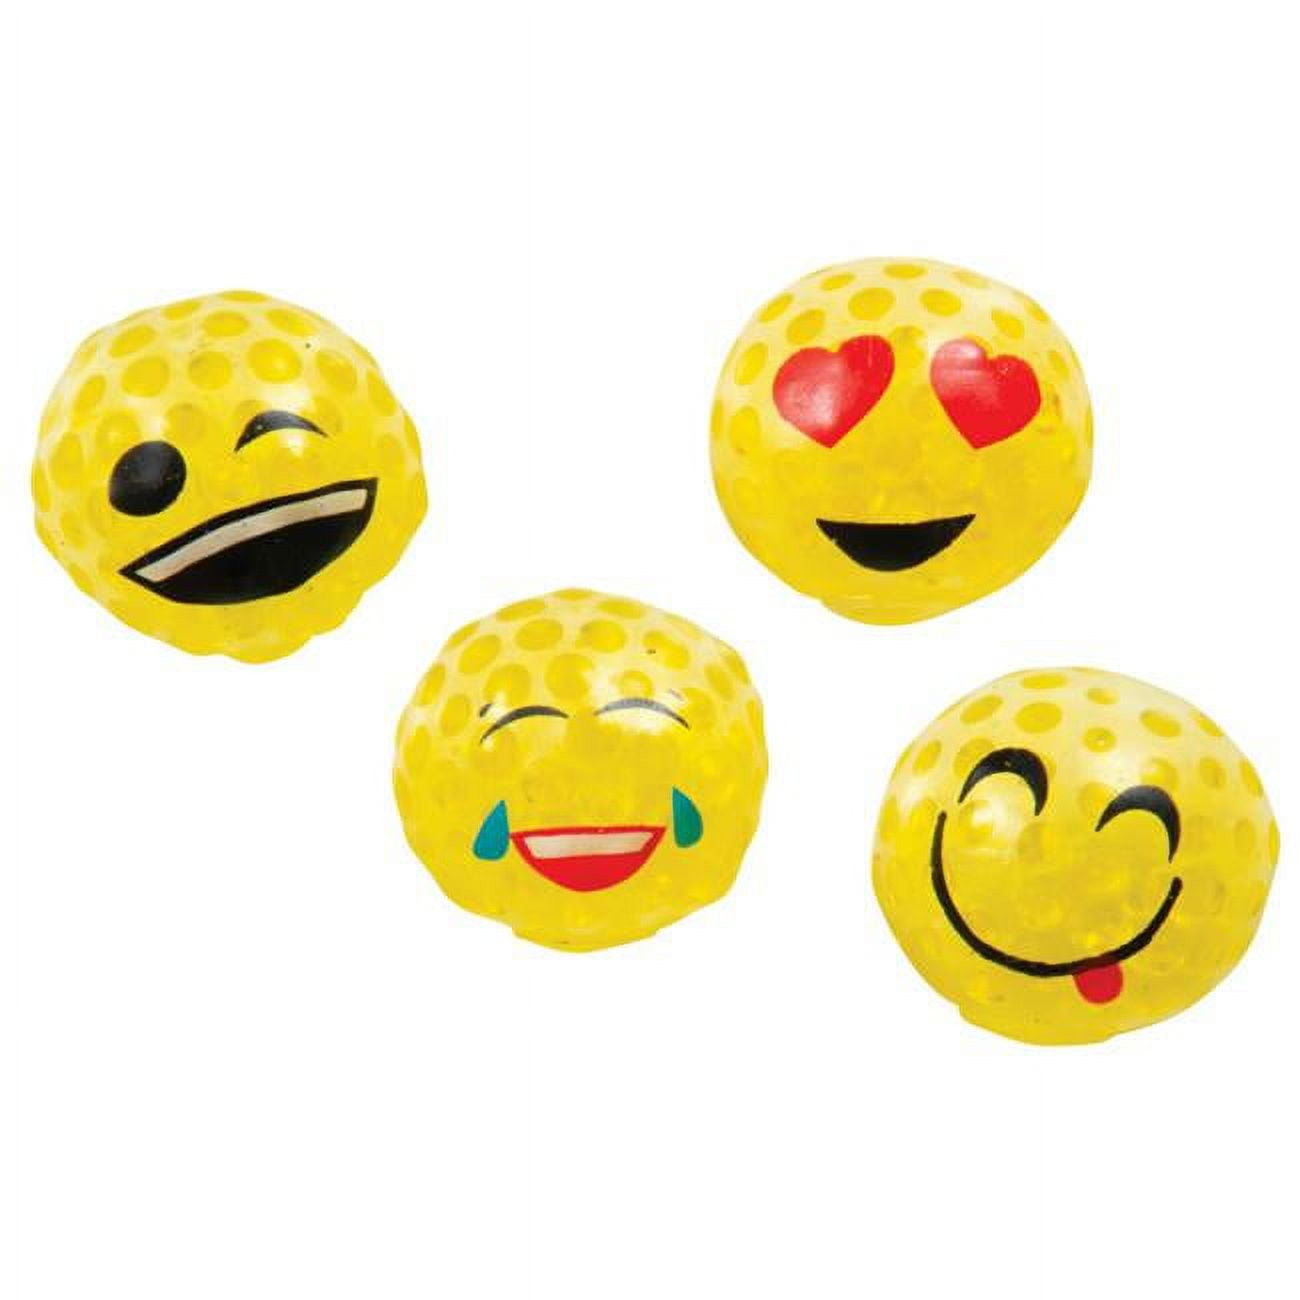 2 In. Emoji Blobbles Toys, Assorted Design - Case Of 48